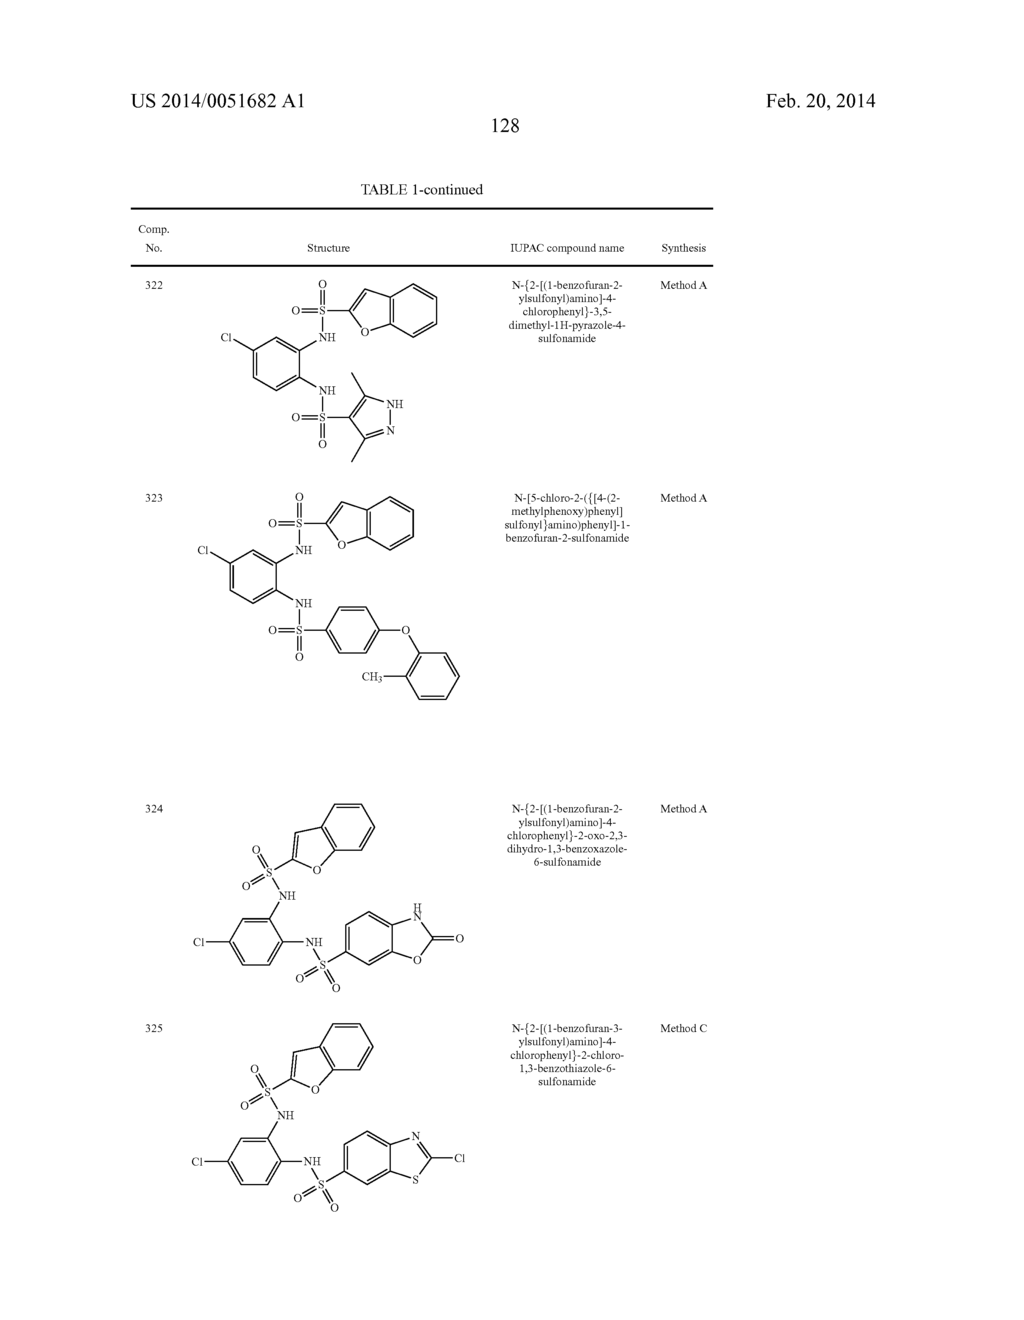 NOVEL 1,2- BIS-SULFONAMIDE DERIVATIVES AS CHEMOKINE RECEPTOR MODULATORS - diagram, schematic, and image 129